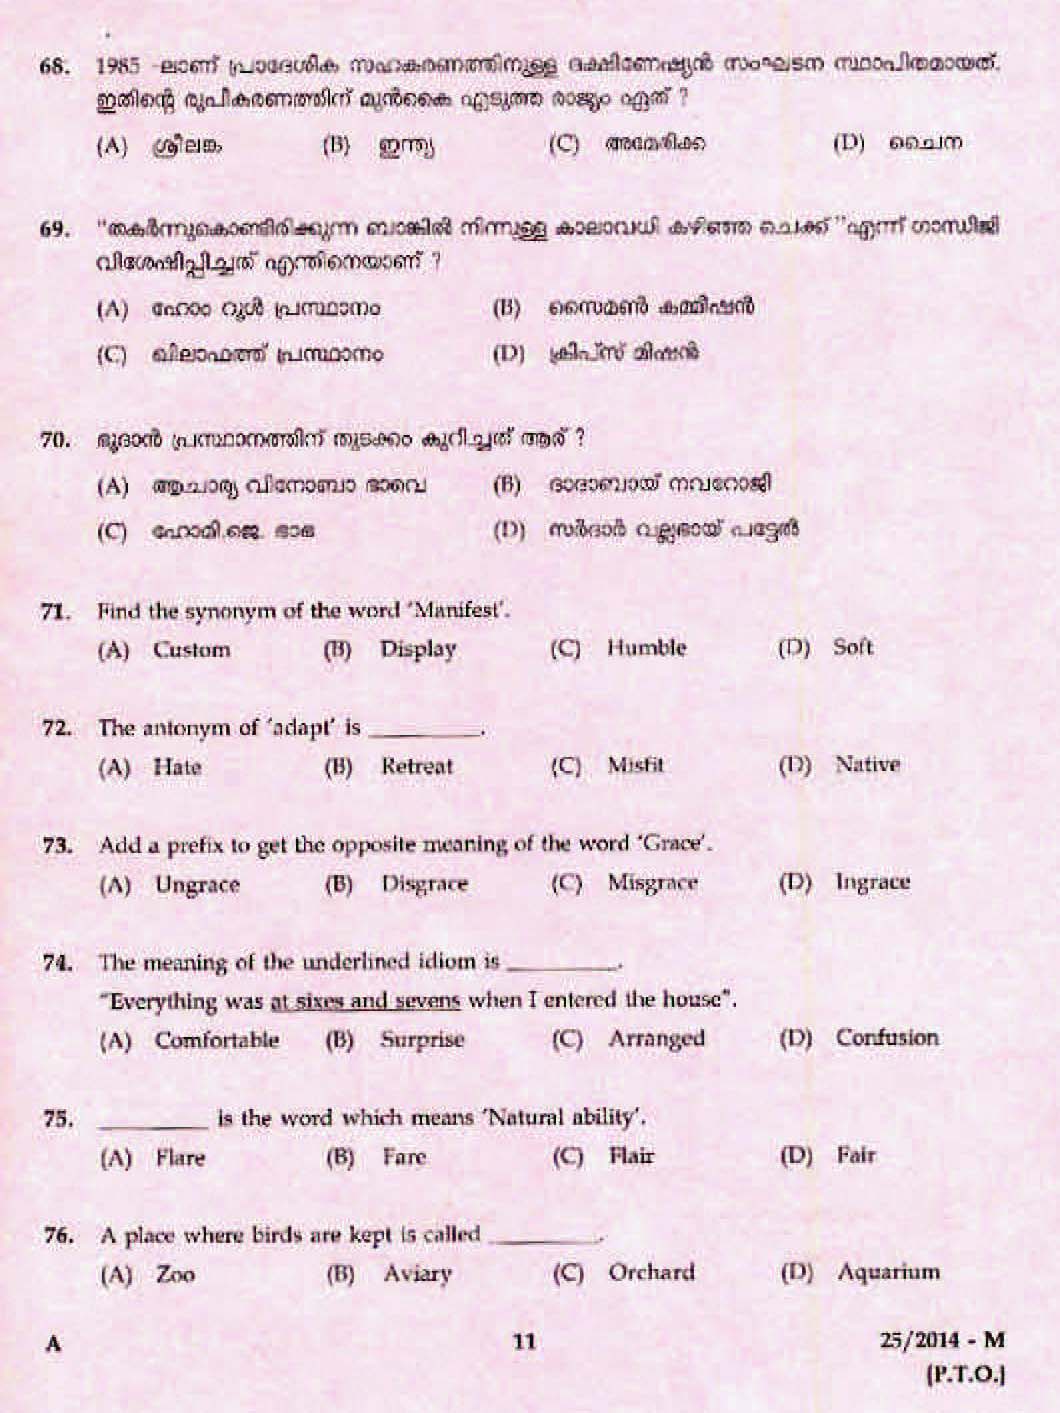 LD Clerk Idukki Question Paper Malayalam 2014 Paper Code 252014 M 7